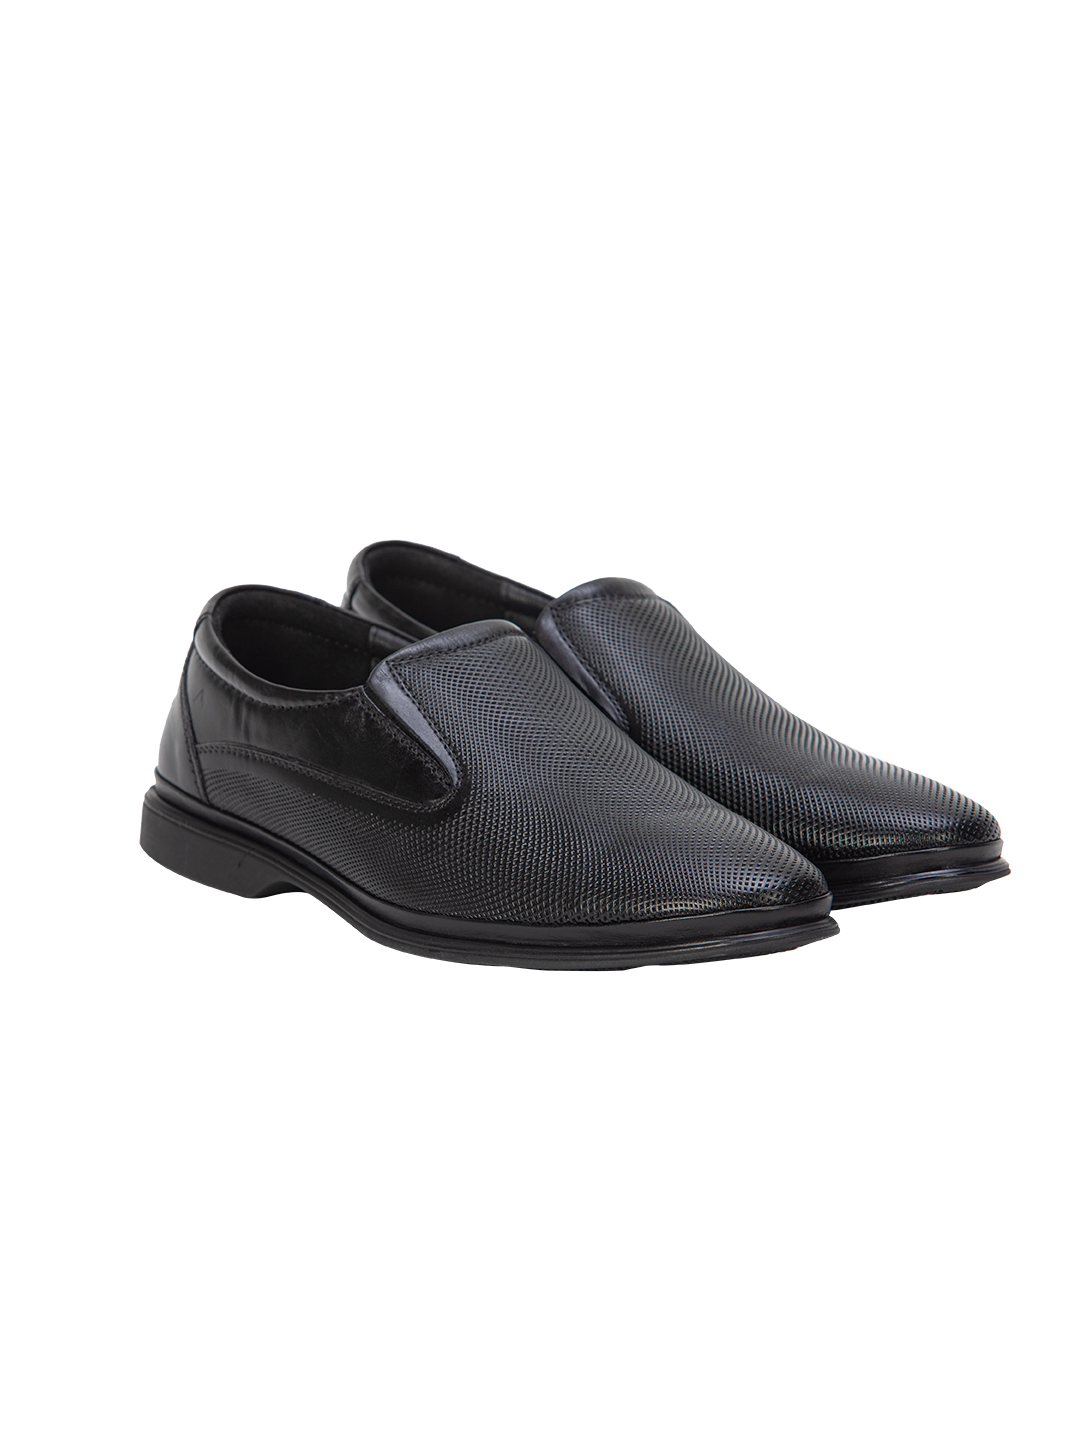 Buy Von Wellx Germany Comfort Mondaine Casual Black Shoes Online in Dammam